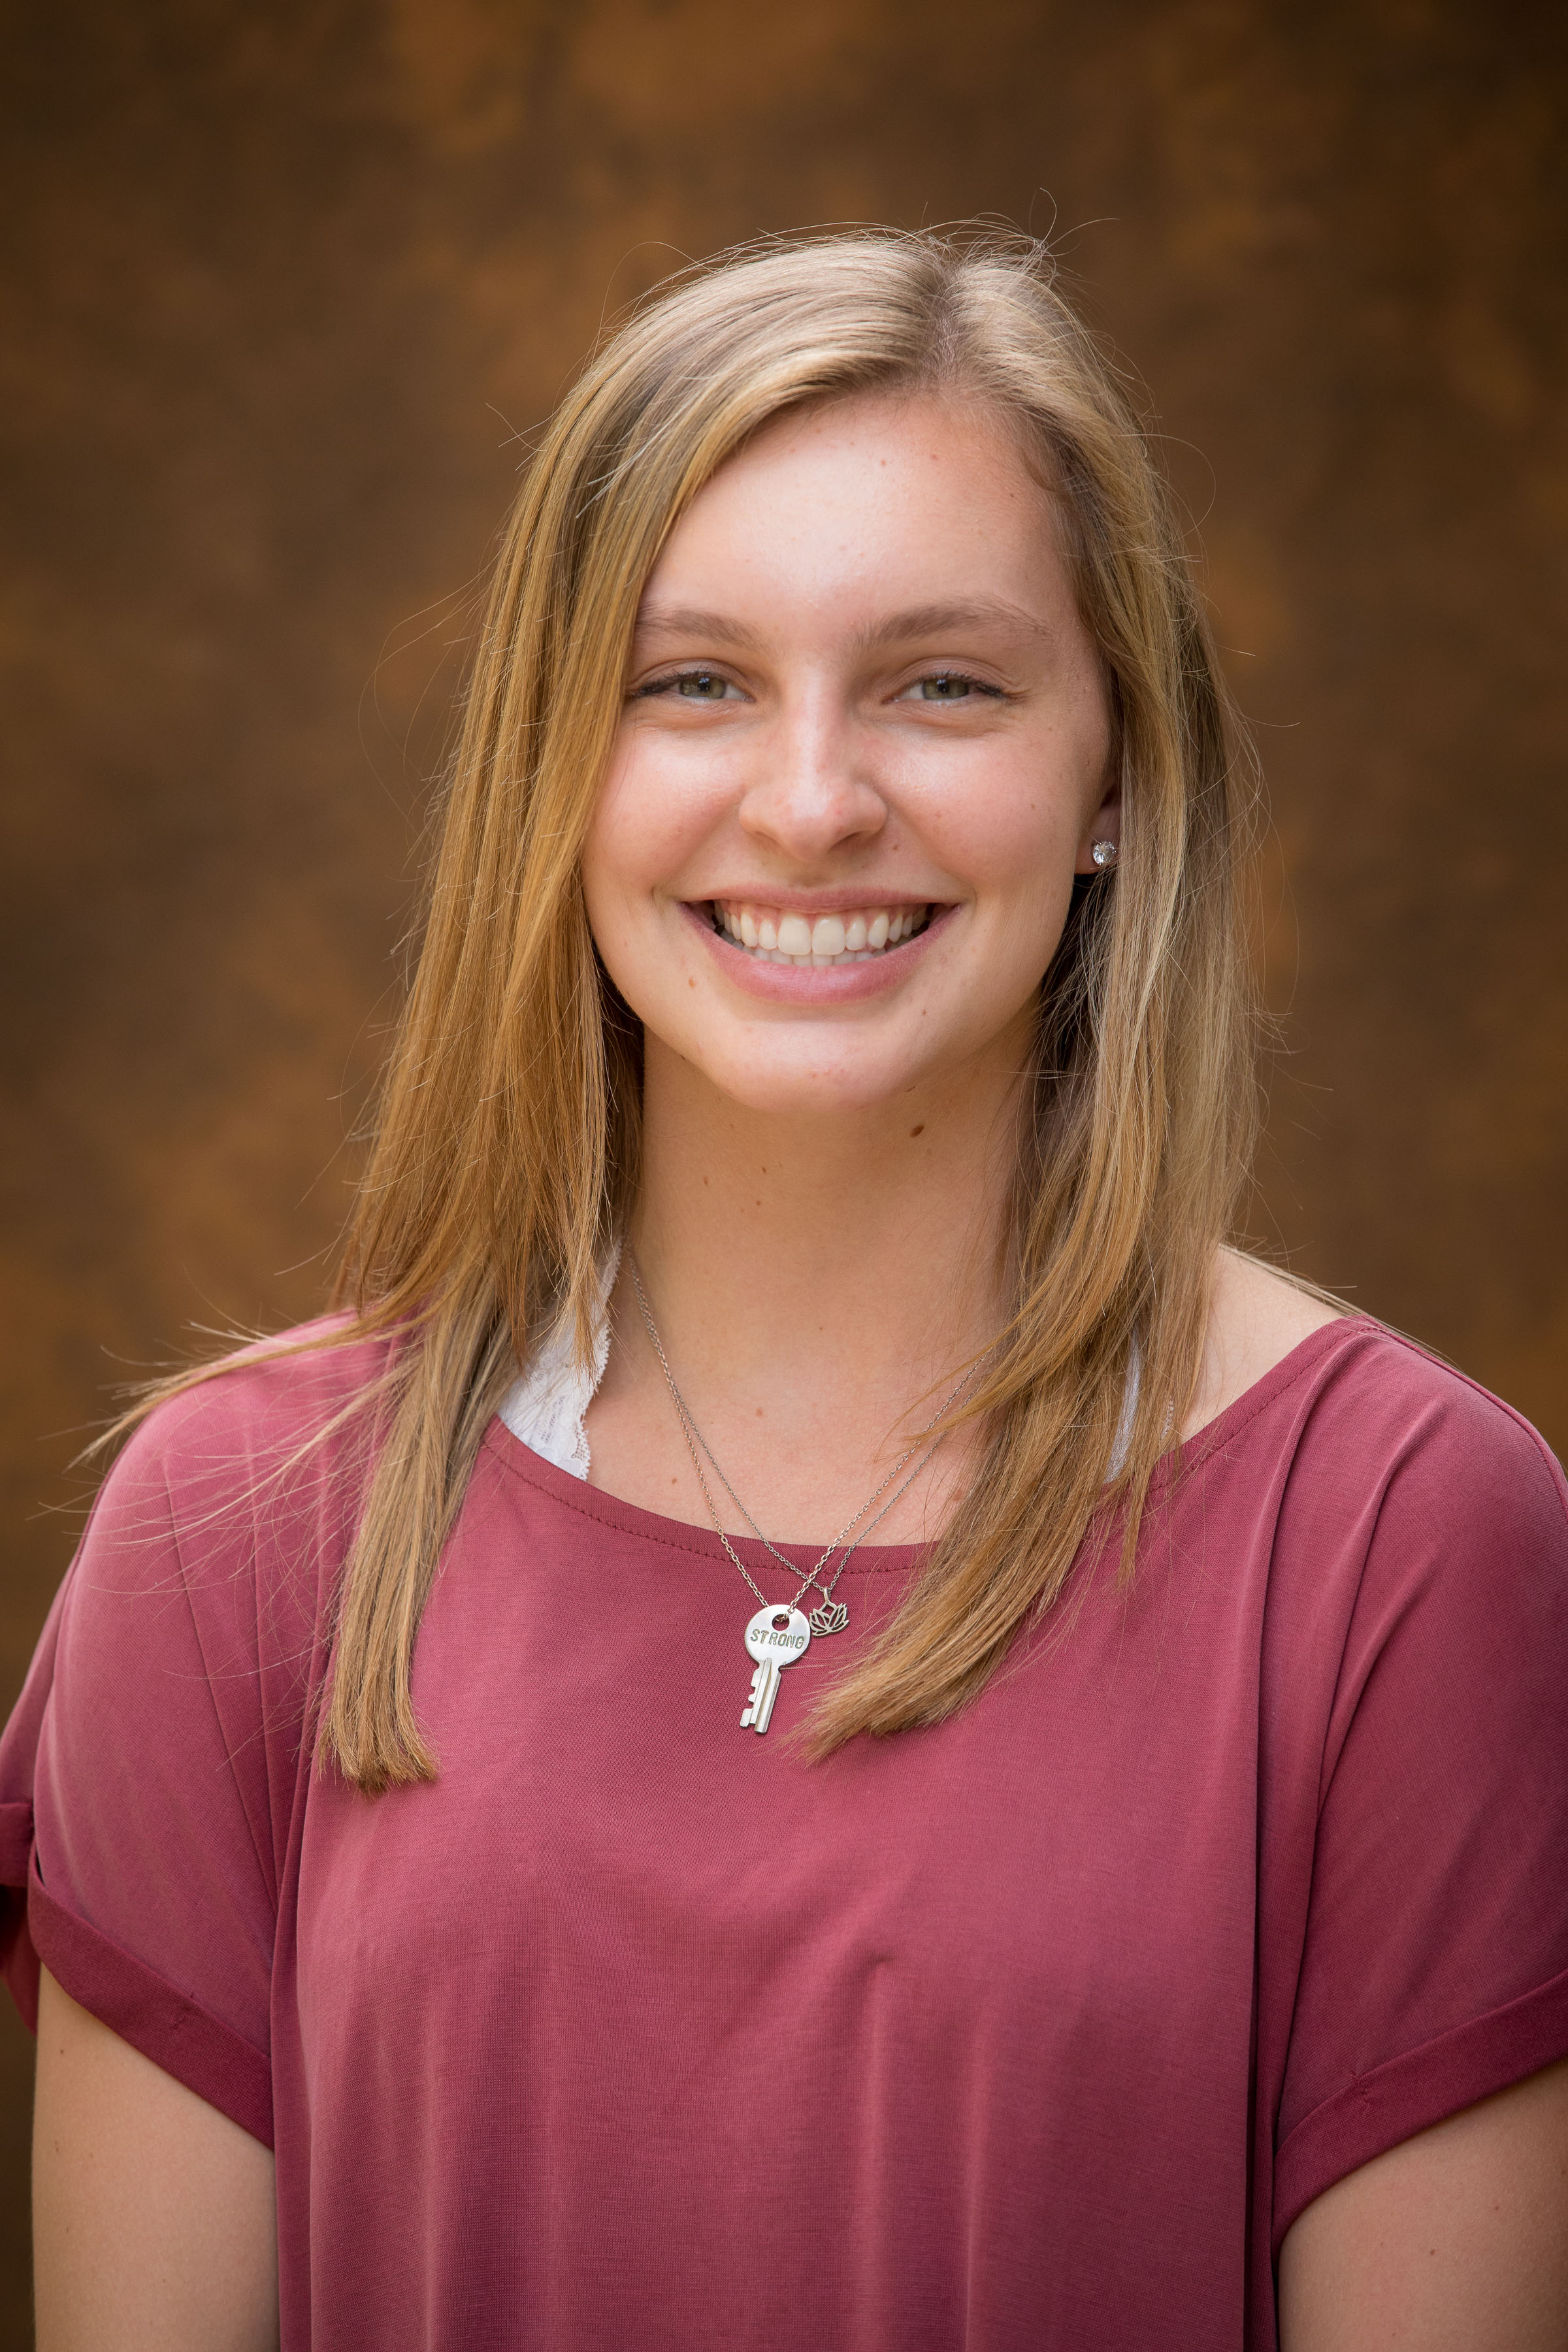 Emily Stoppler hopes to attend graduate school for sport psychology 